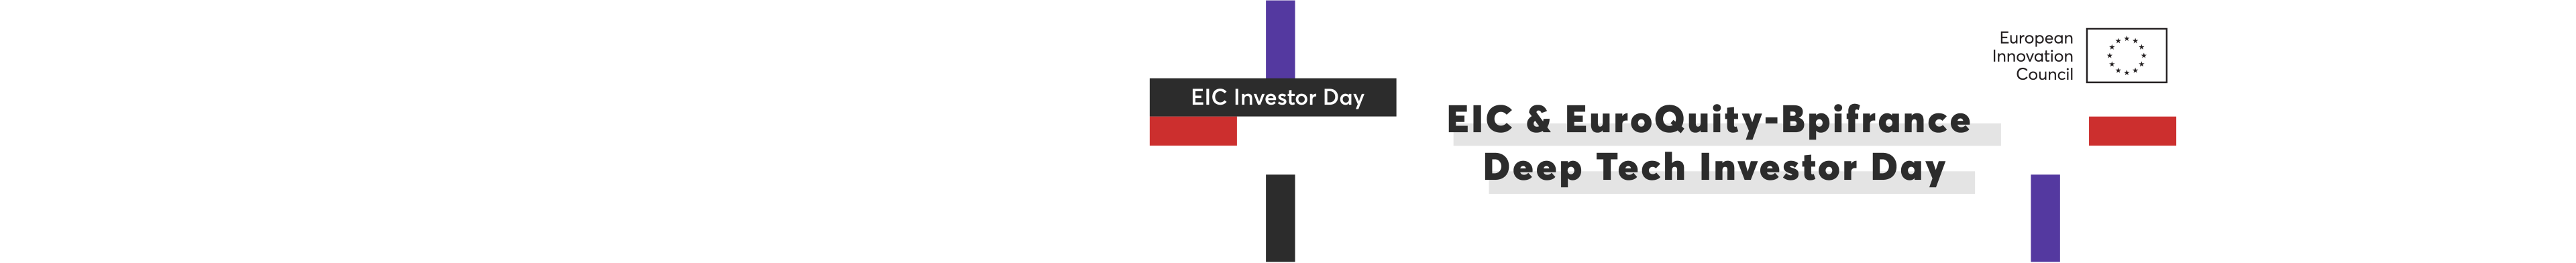 EIC Investor Days EuroQuity-Bpifrance Deep Tech Community Banner